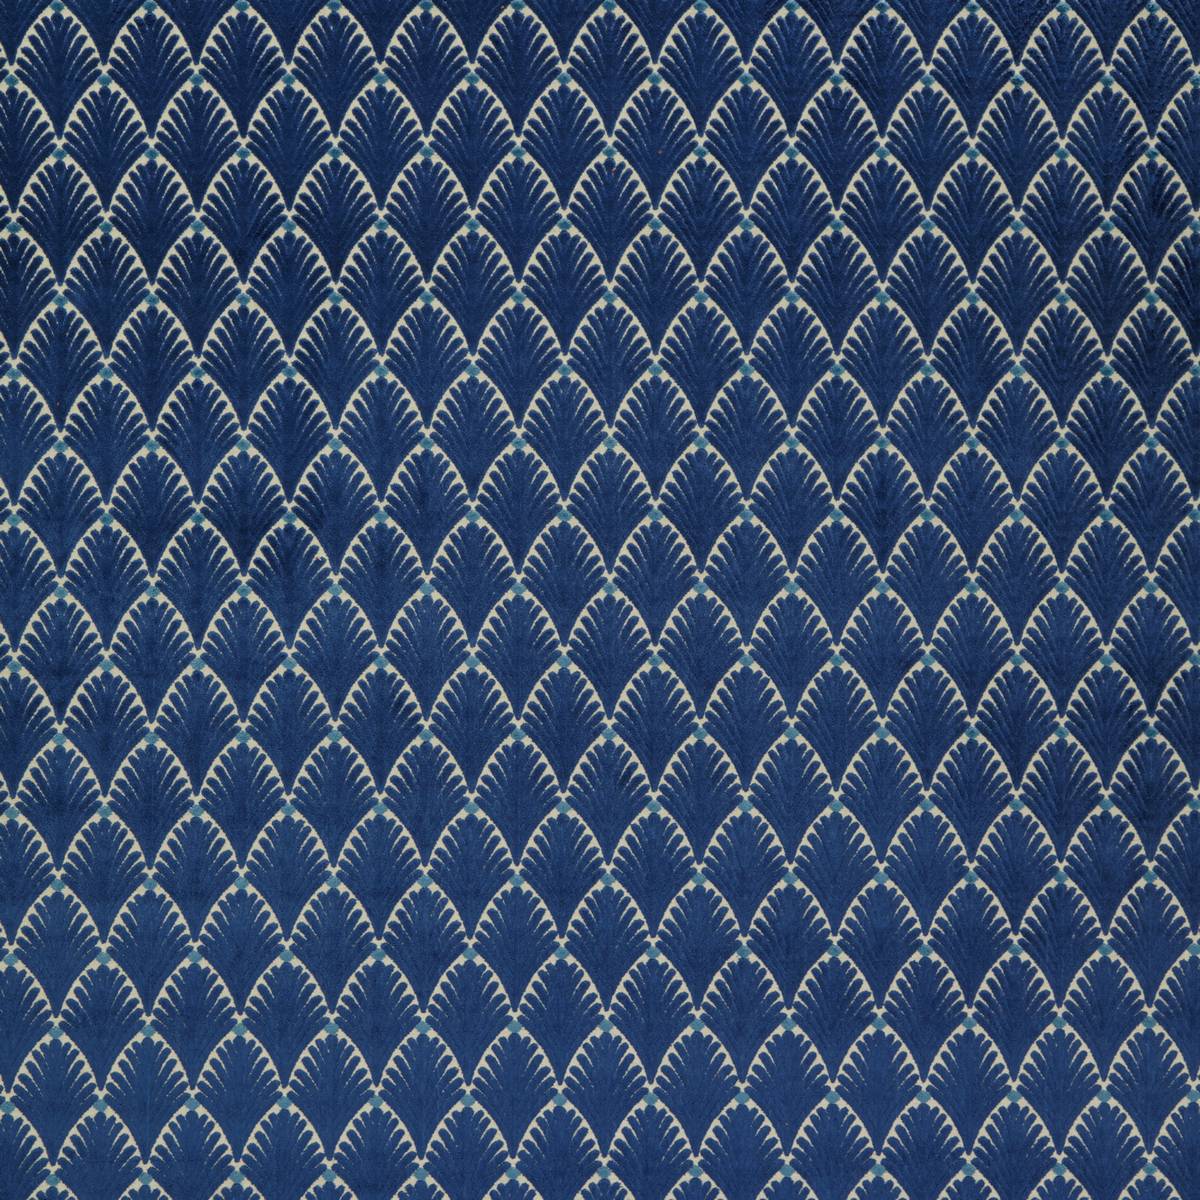 Galerie Marine Fabric by iLiv